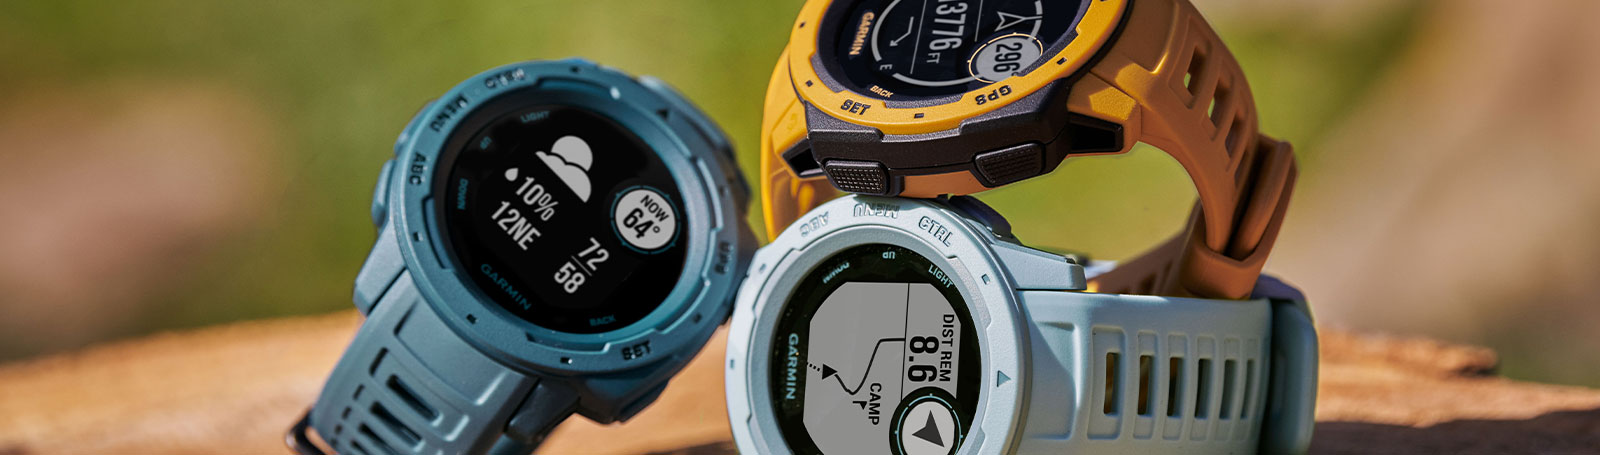 hiking smartwatch